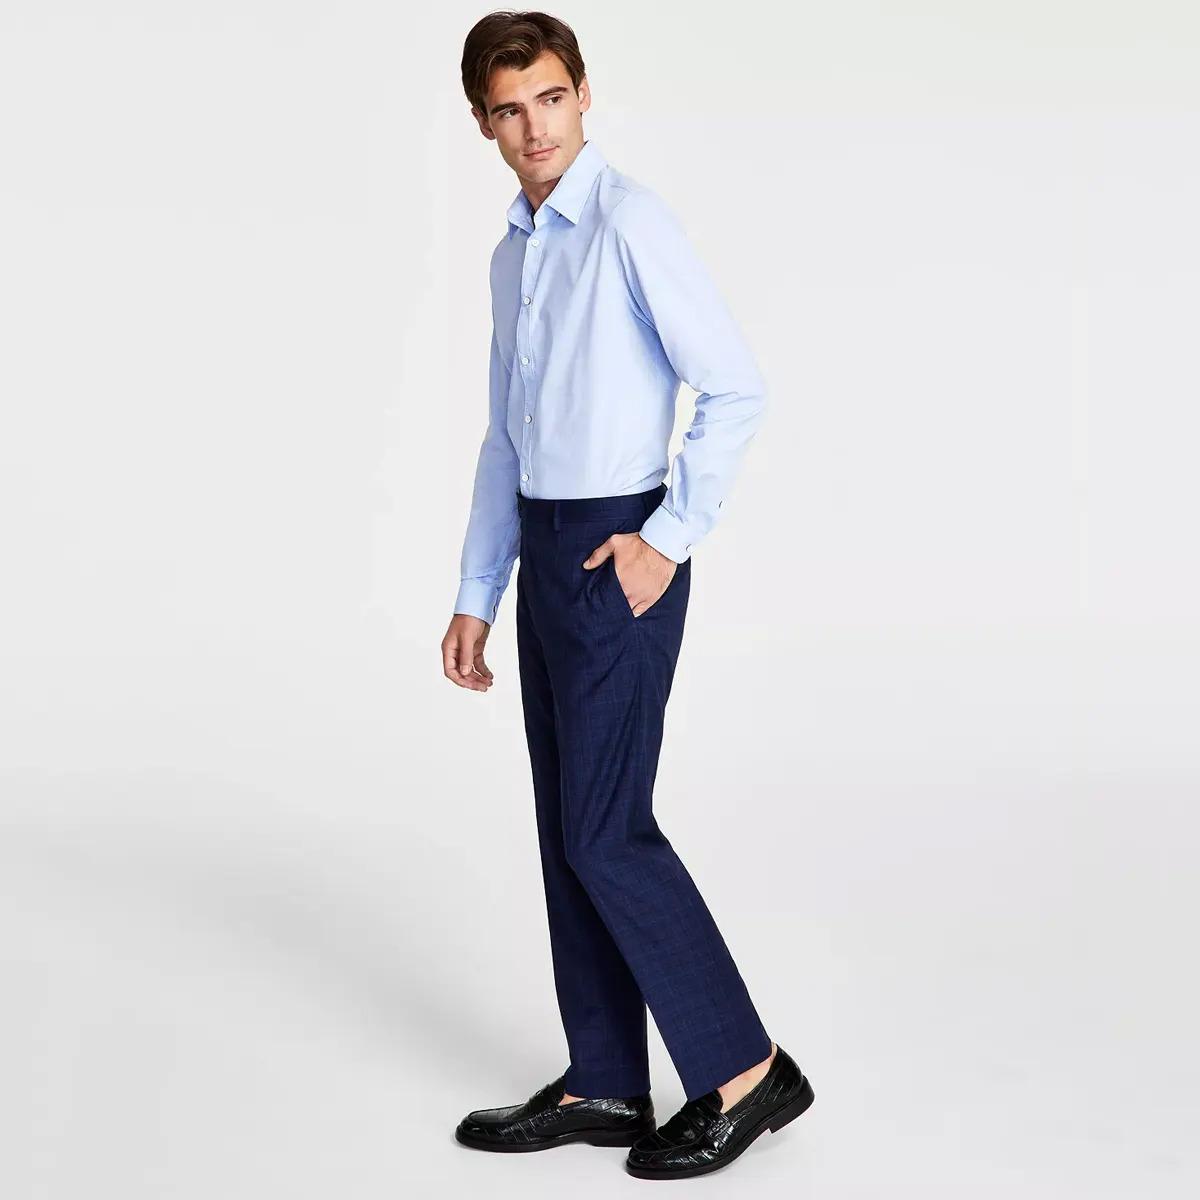 Calvin Klein Slim-Fit Plaid Performance Dress Pants for $17.99